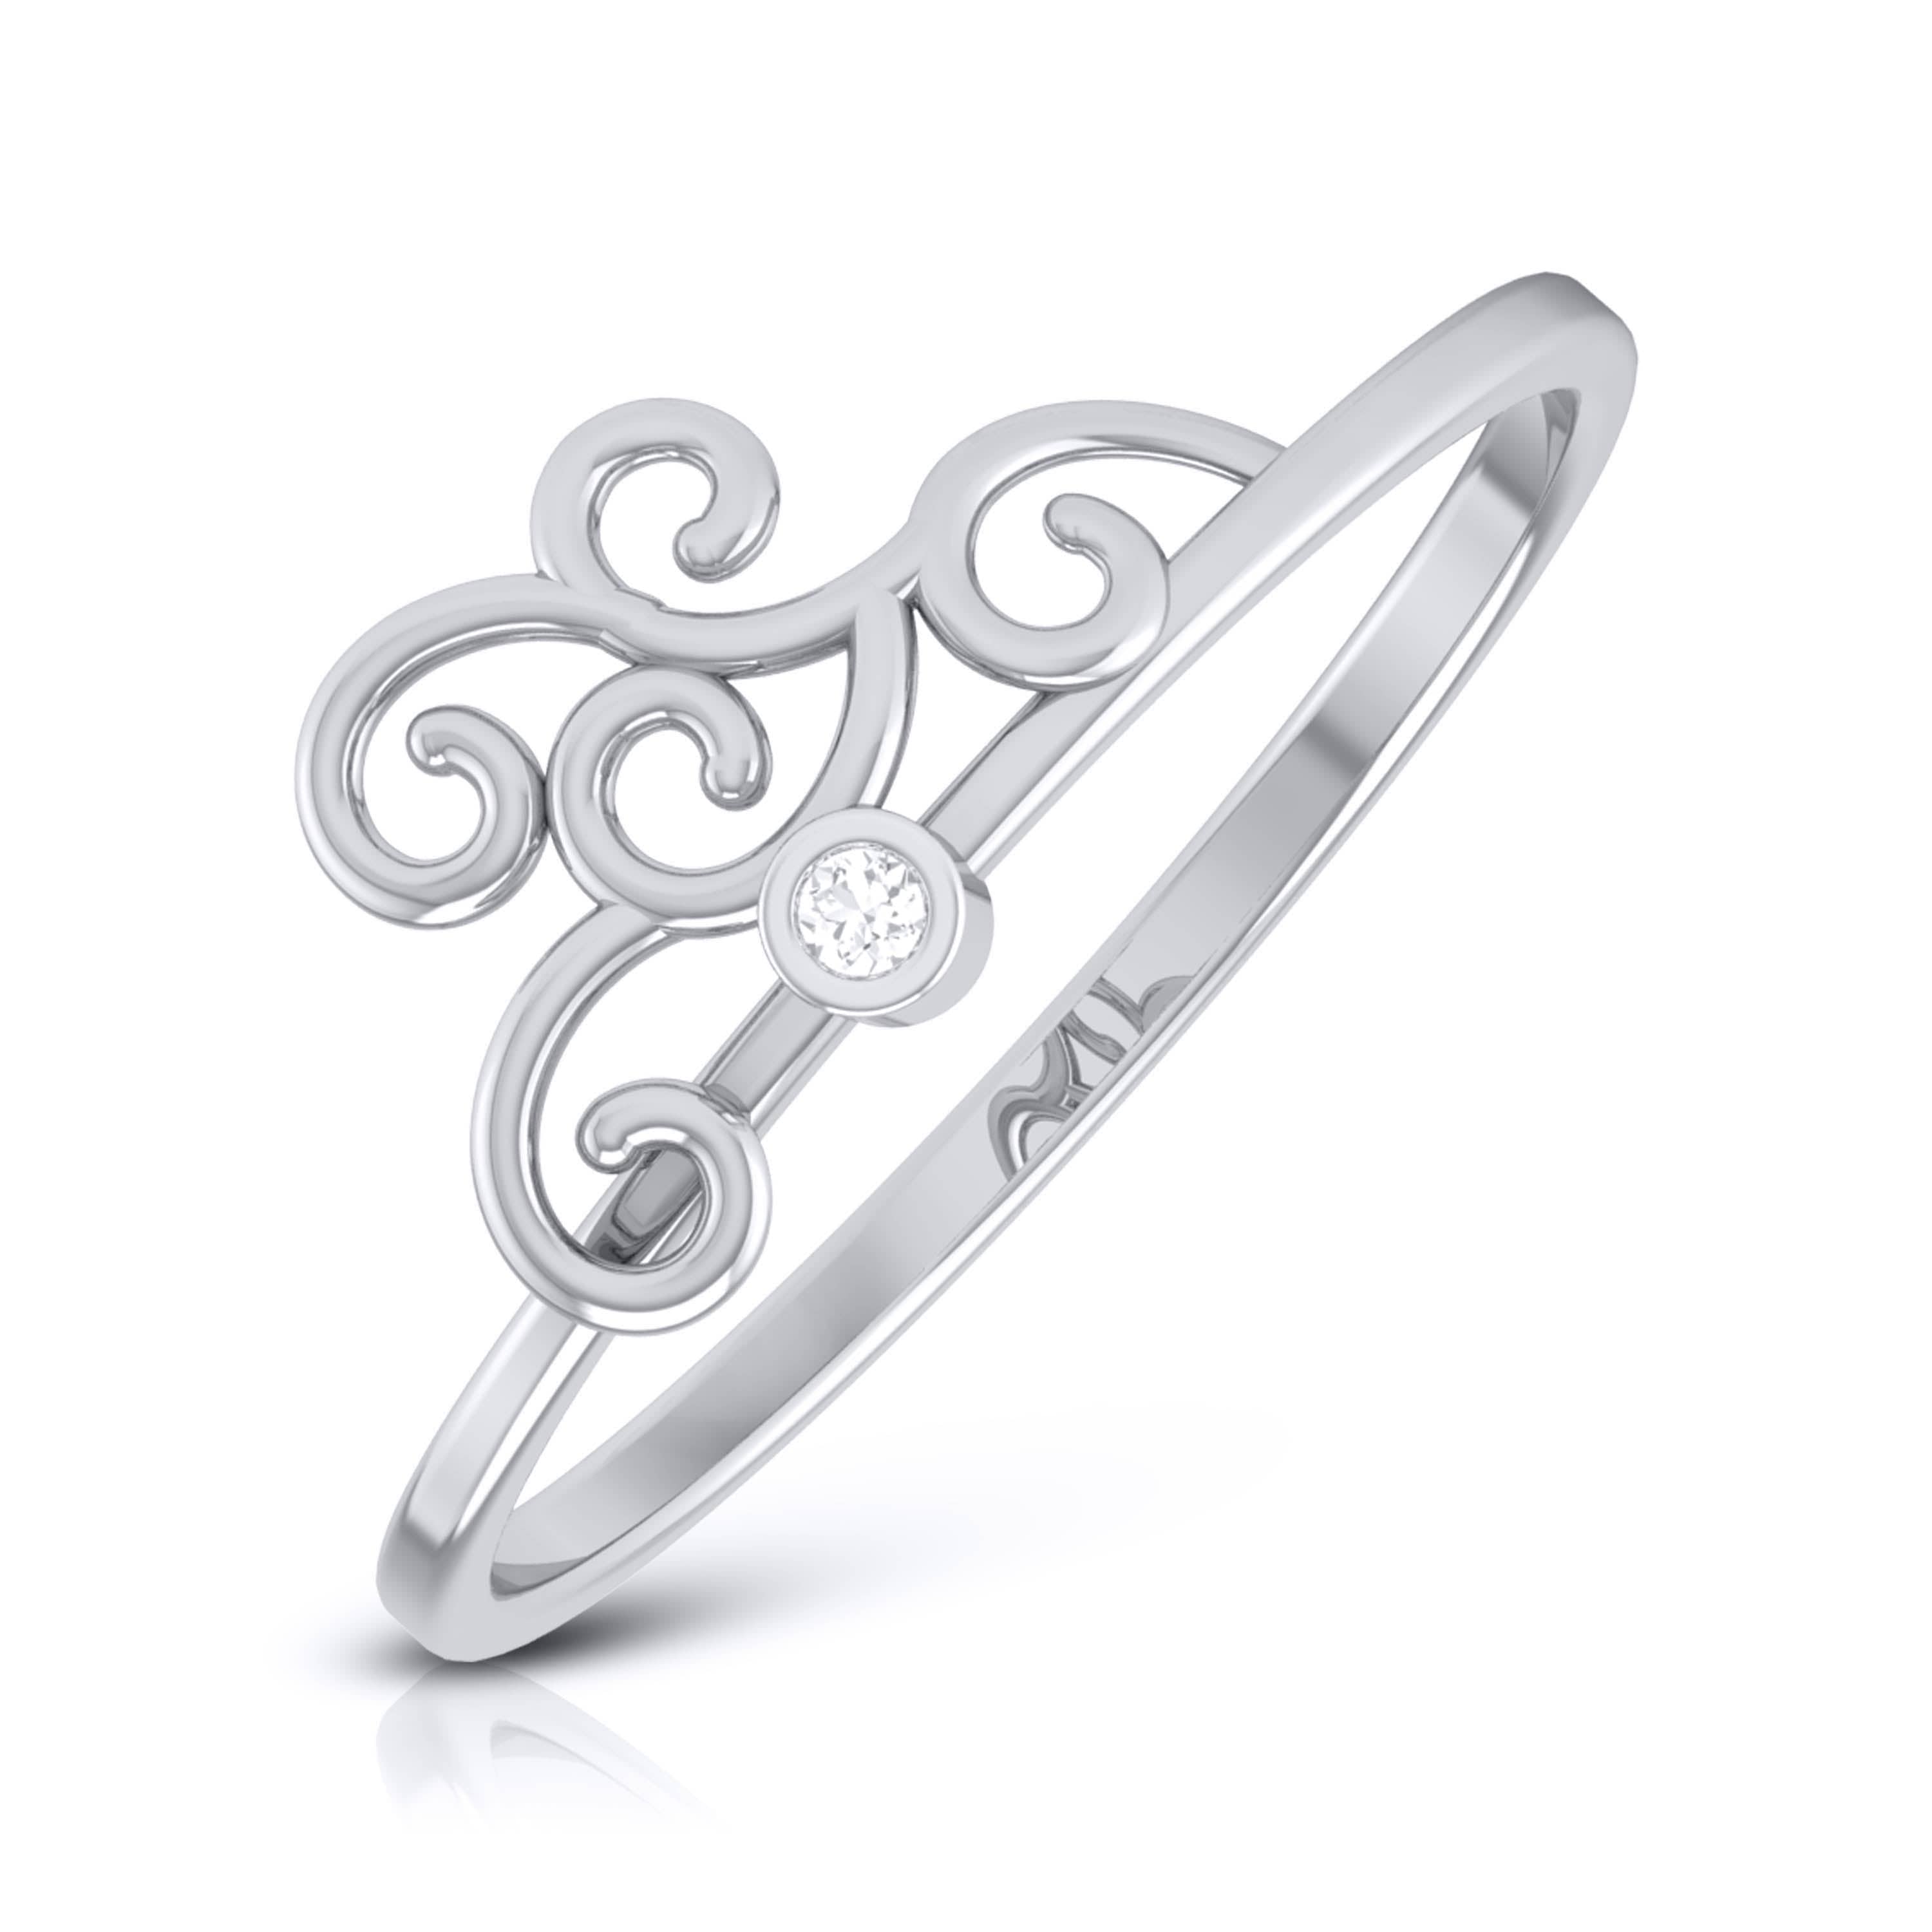 European 925 Sterling Silver Wedding Finger Ring Jewelry For Fashion Women  Girls | eBay